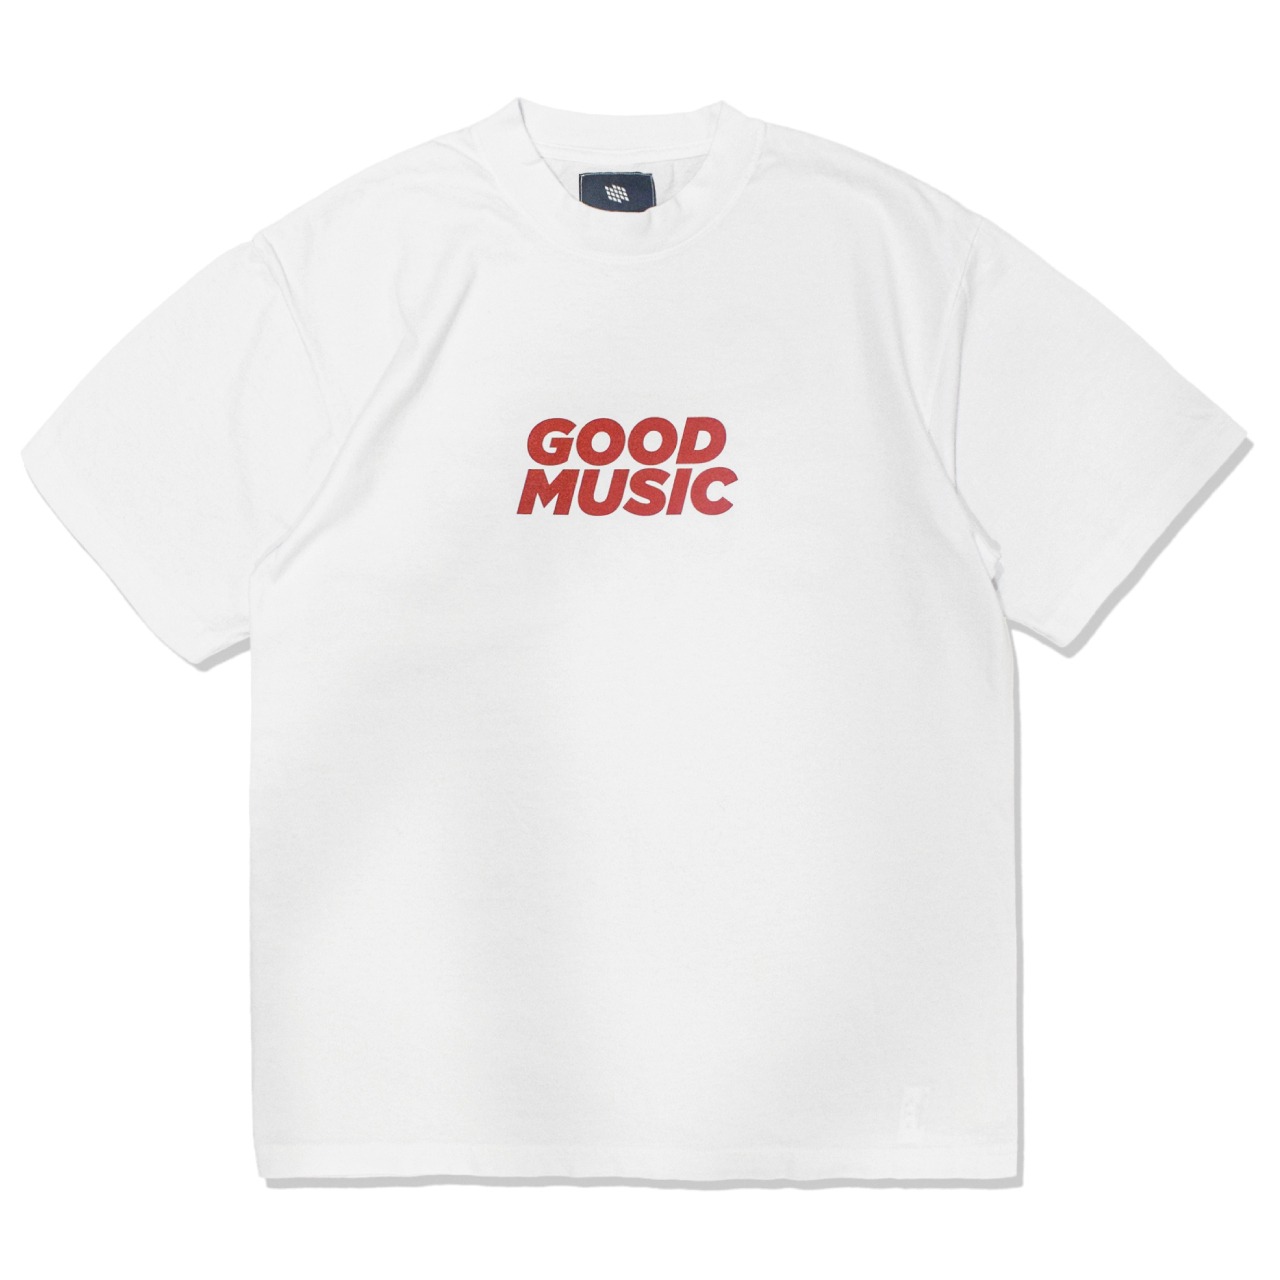 Good "DUB" Tee Shirts - White